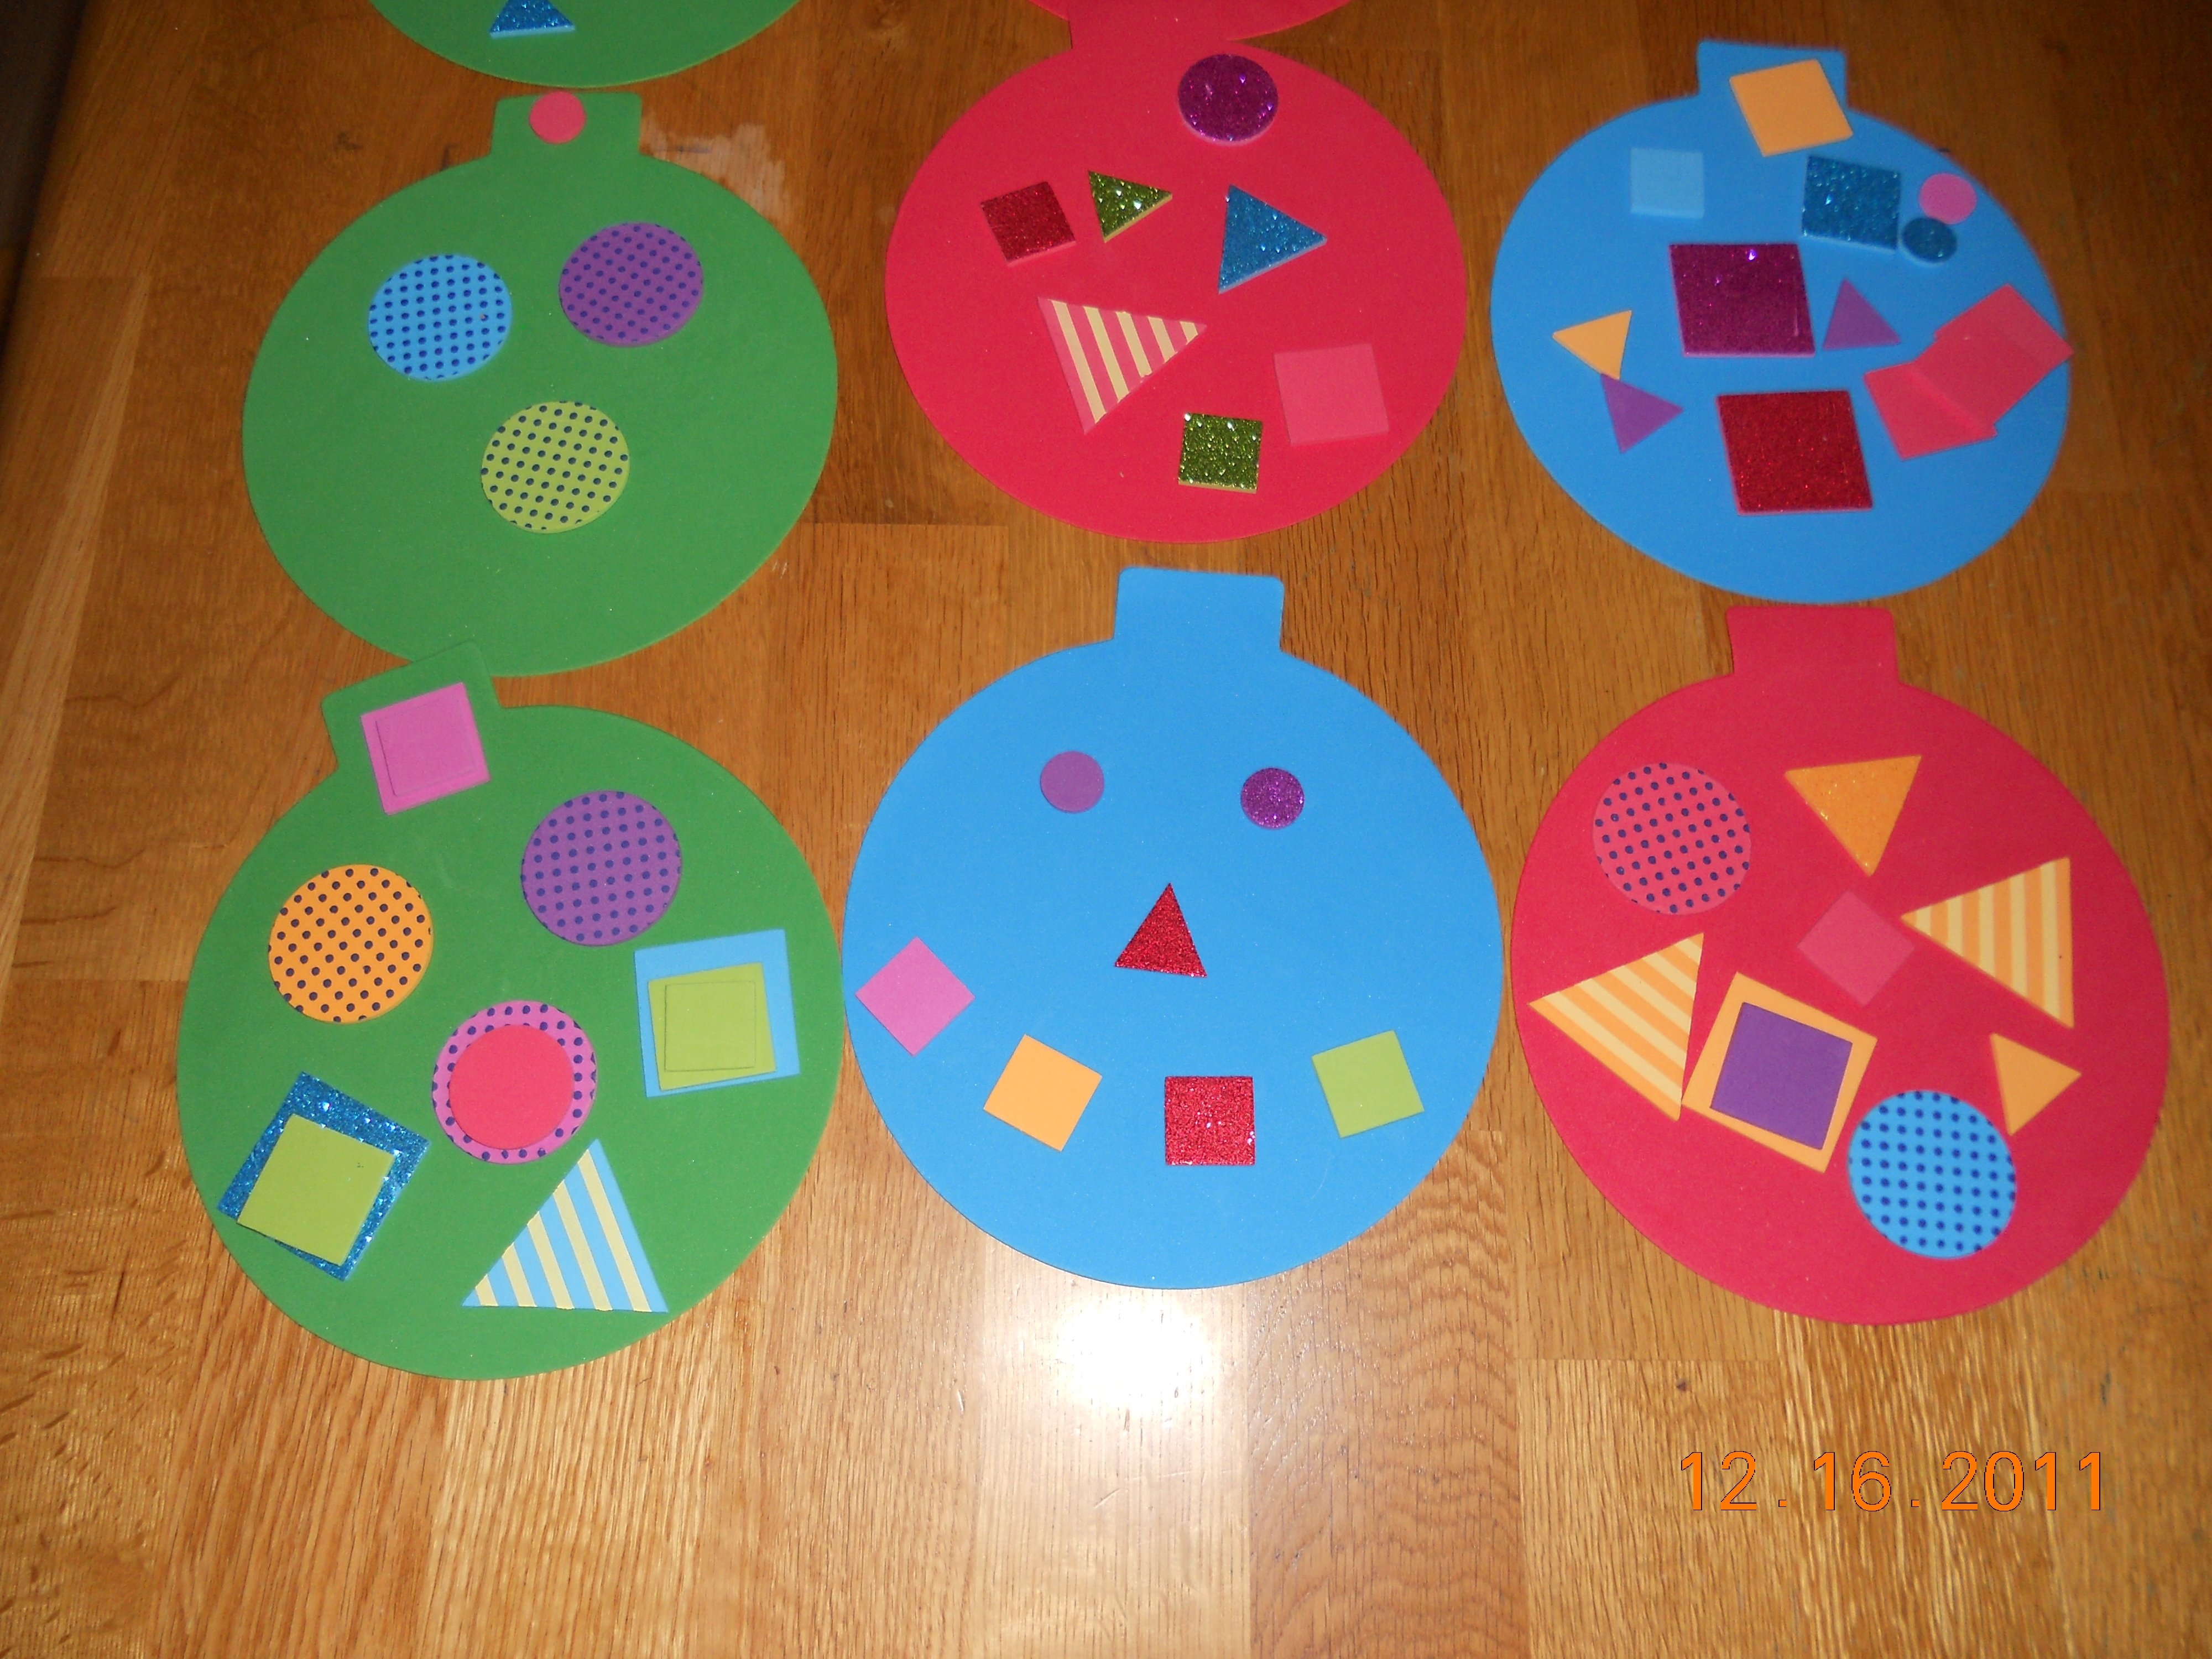 10 Wonderful Kids Craft Ideas For Christmas 15 fun and easy christmas craft ideas for kids miss lassy 6 2022